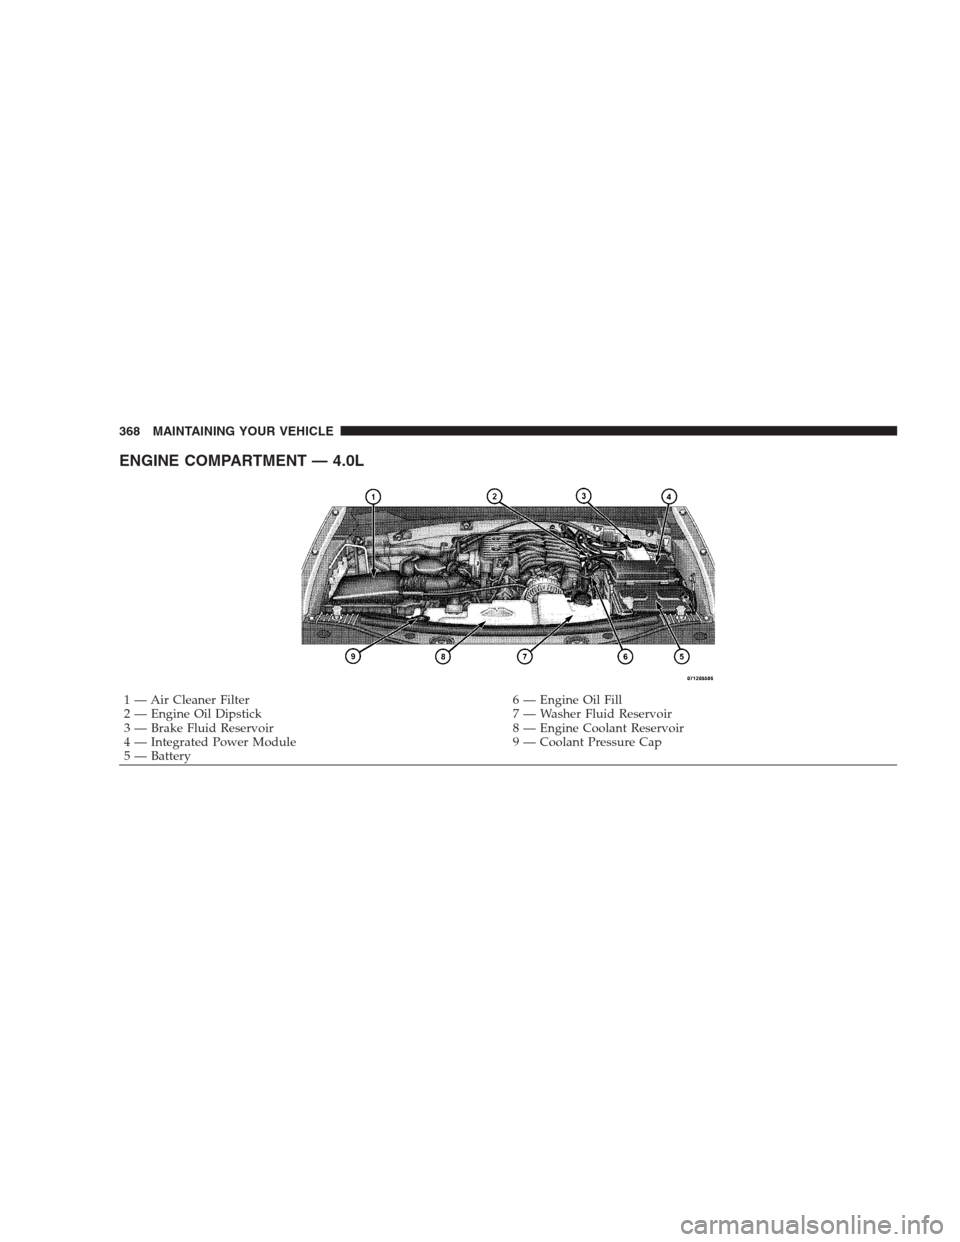 DODGE NITRO 2009 1.G Owners Manual ENGINE COMPARTMENT — 4.0L
1 — Air Cleaner Filter 6 — Engine Oil Fill
2 — Engine Oil Dipstick 7 — Washer Fluid Reservoir
3 — Brake Fluid Reservoir 8 — Engine Coolant Reservoir
4 — Integ